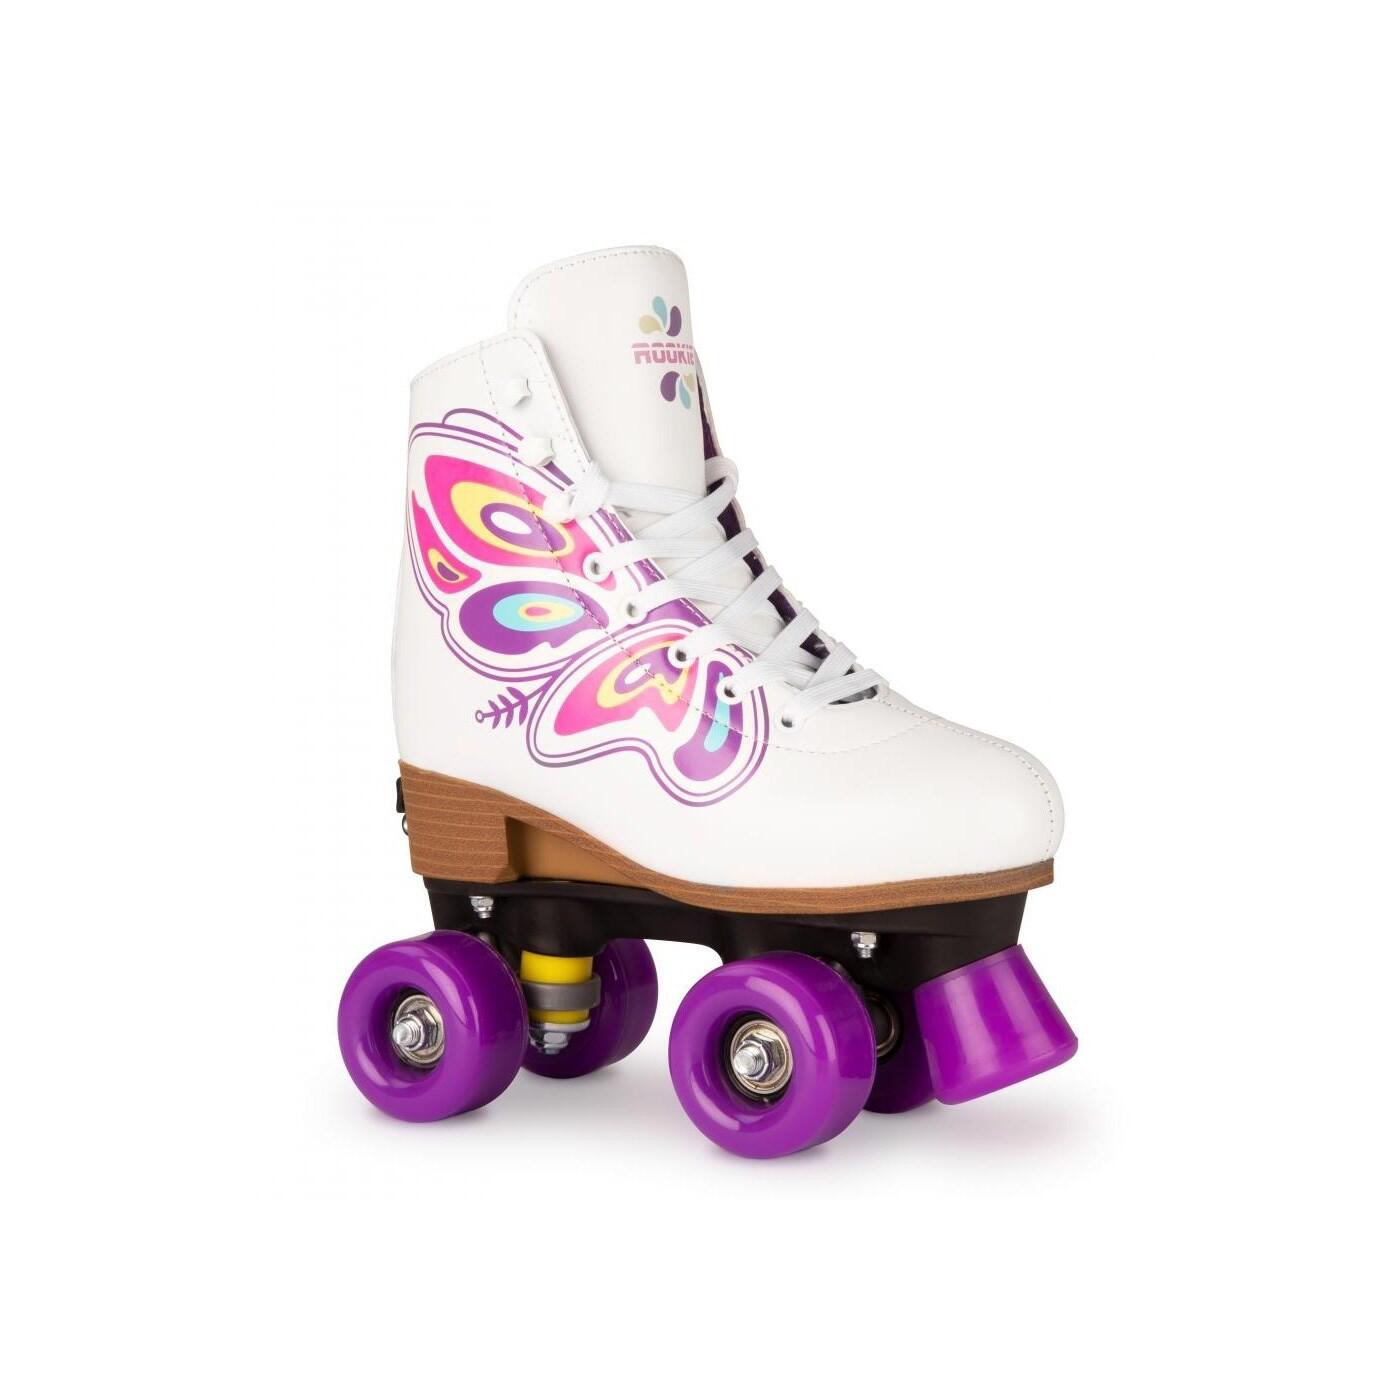 ROOKIE Butterfly White Adjustable Kids Artistic Quad Roller Skates